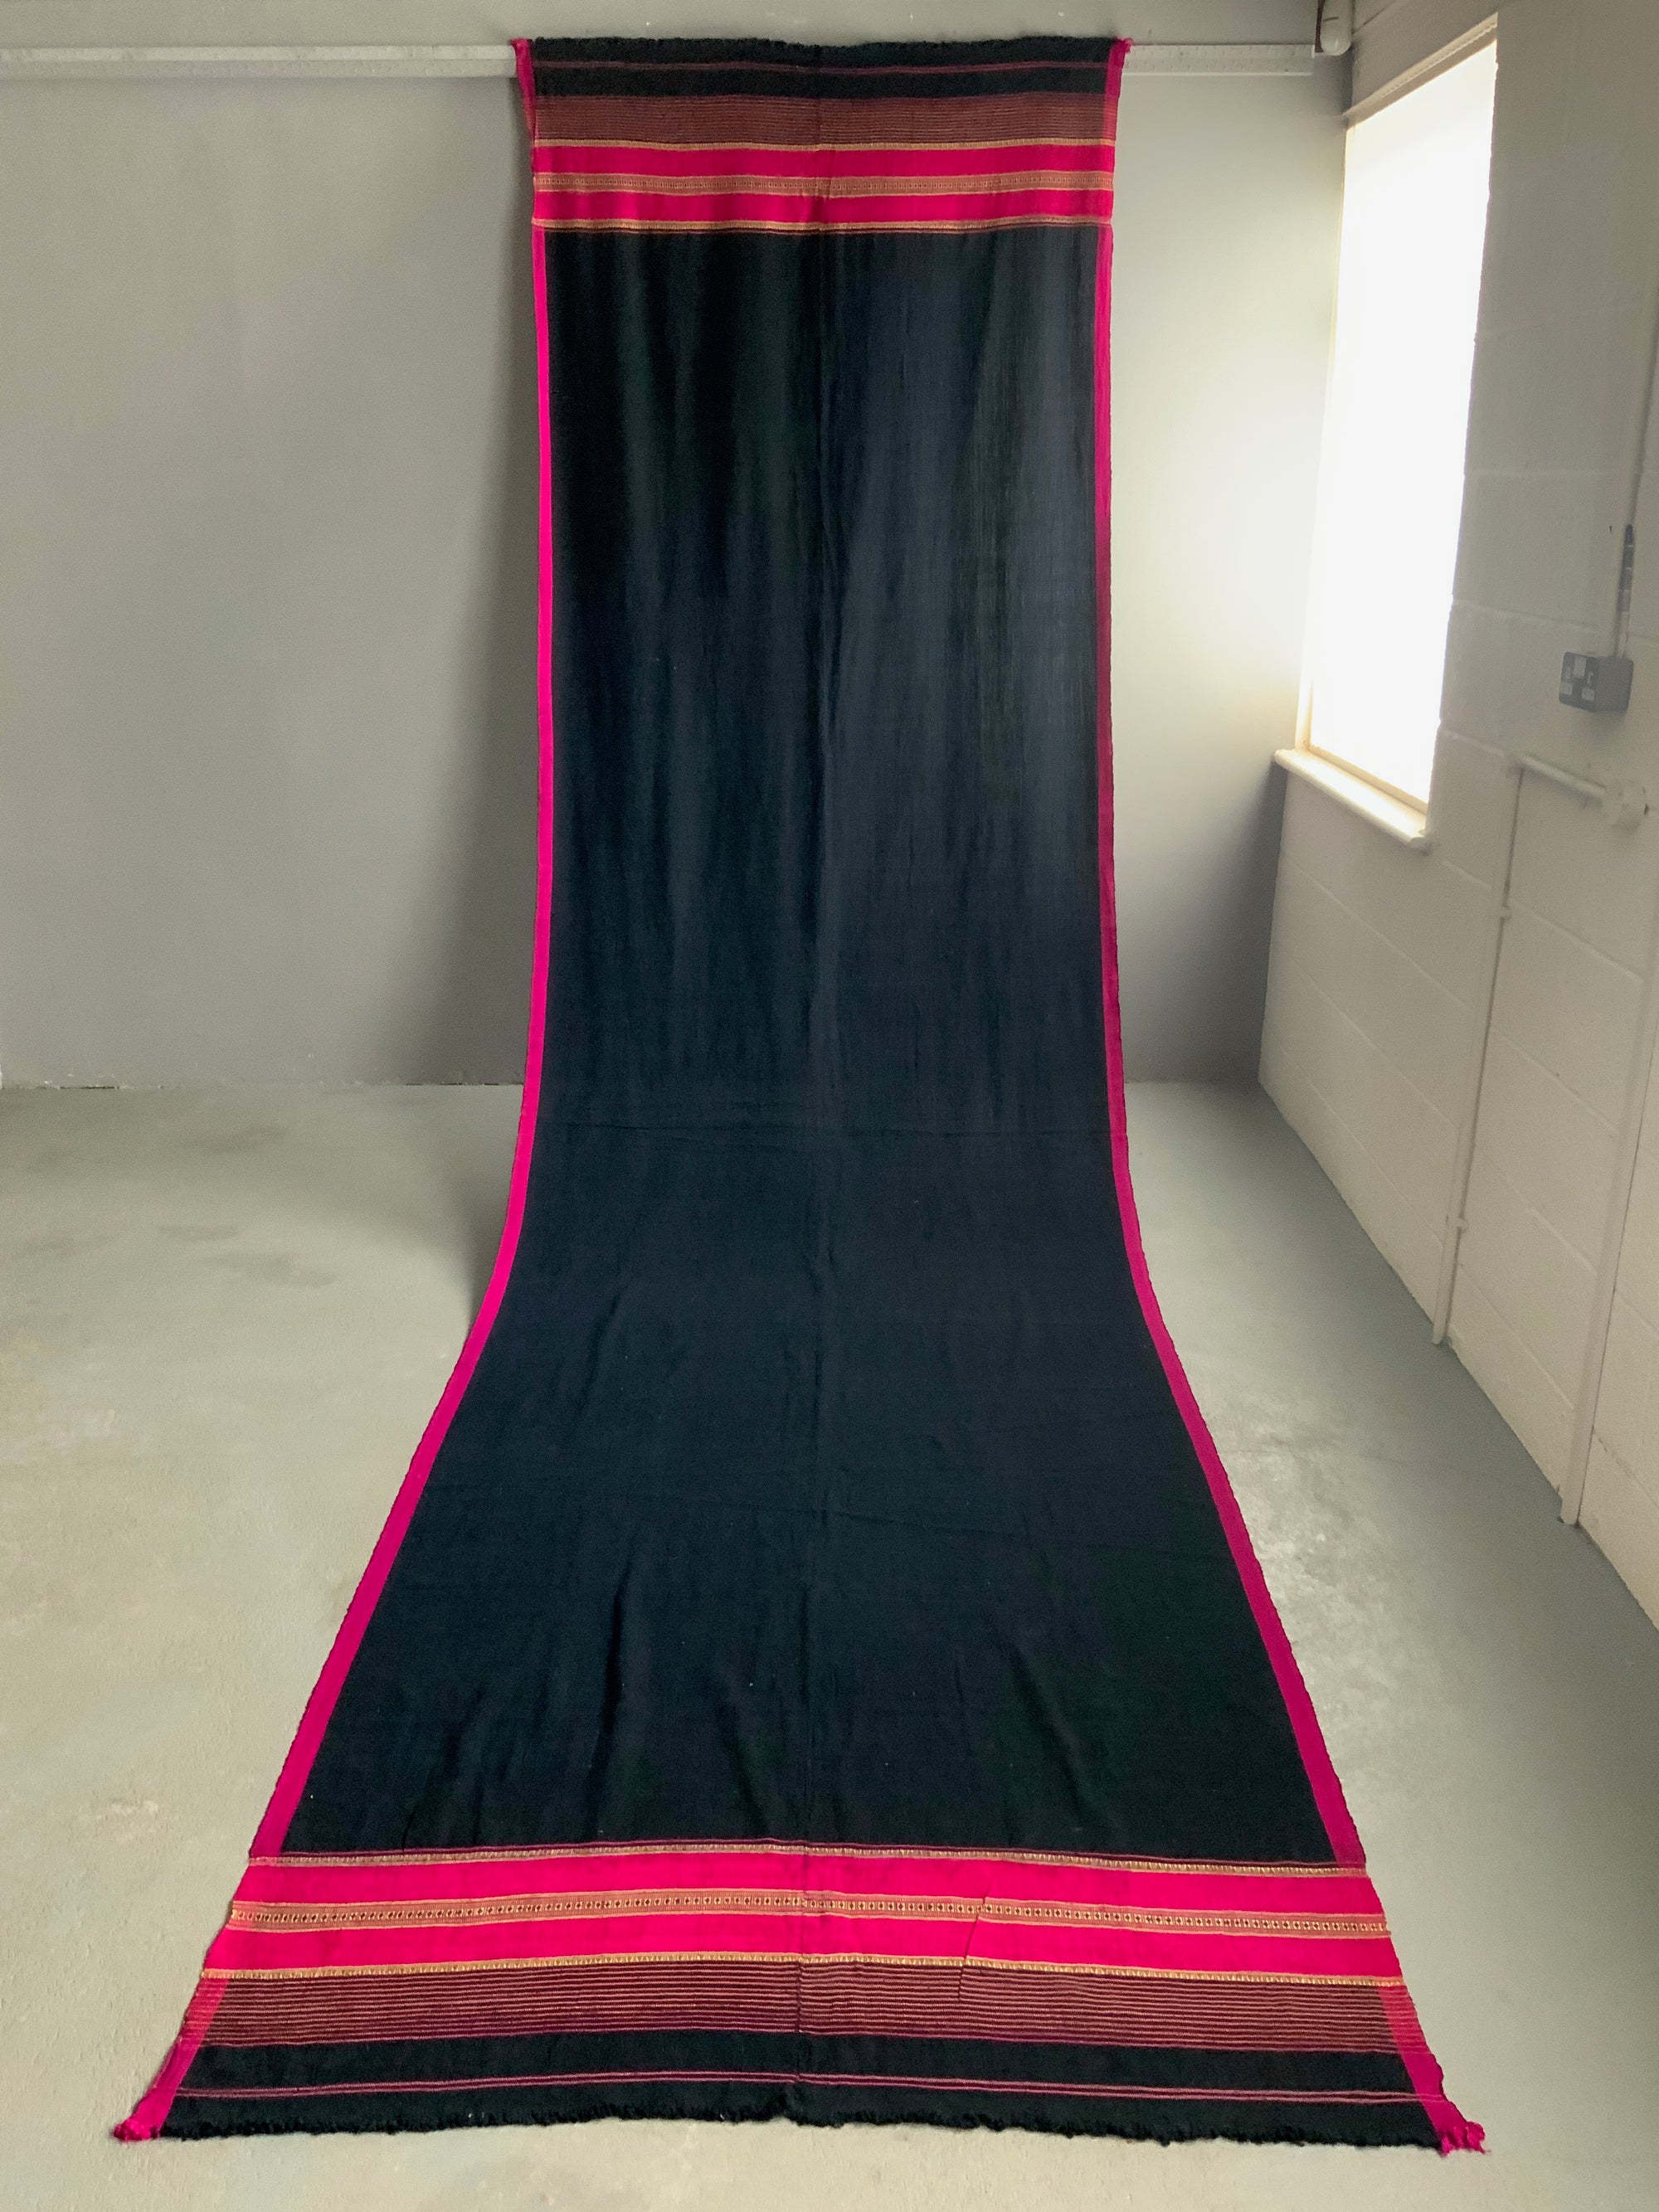 NWFP Pakistan handwoven shawl / wrap (468 x 128cm)